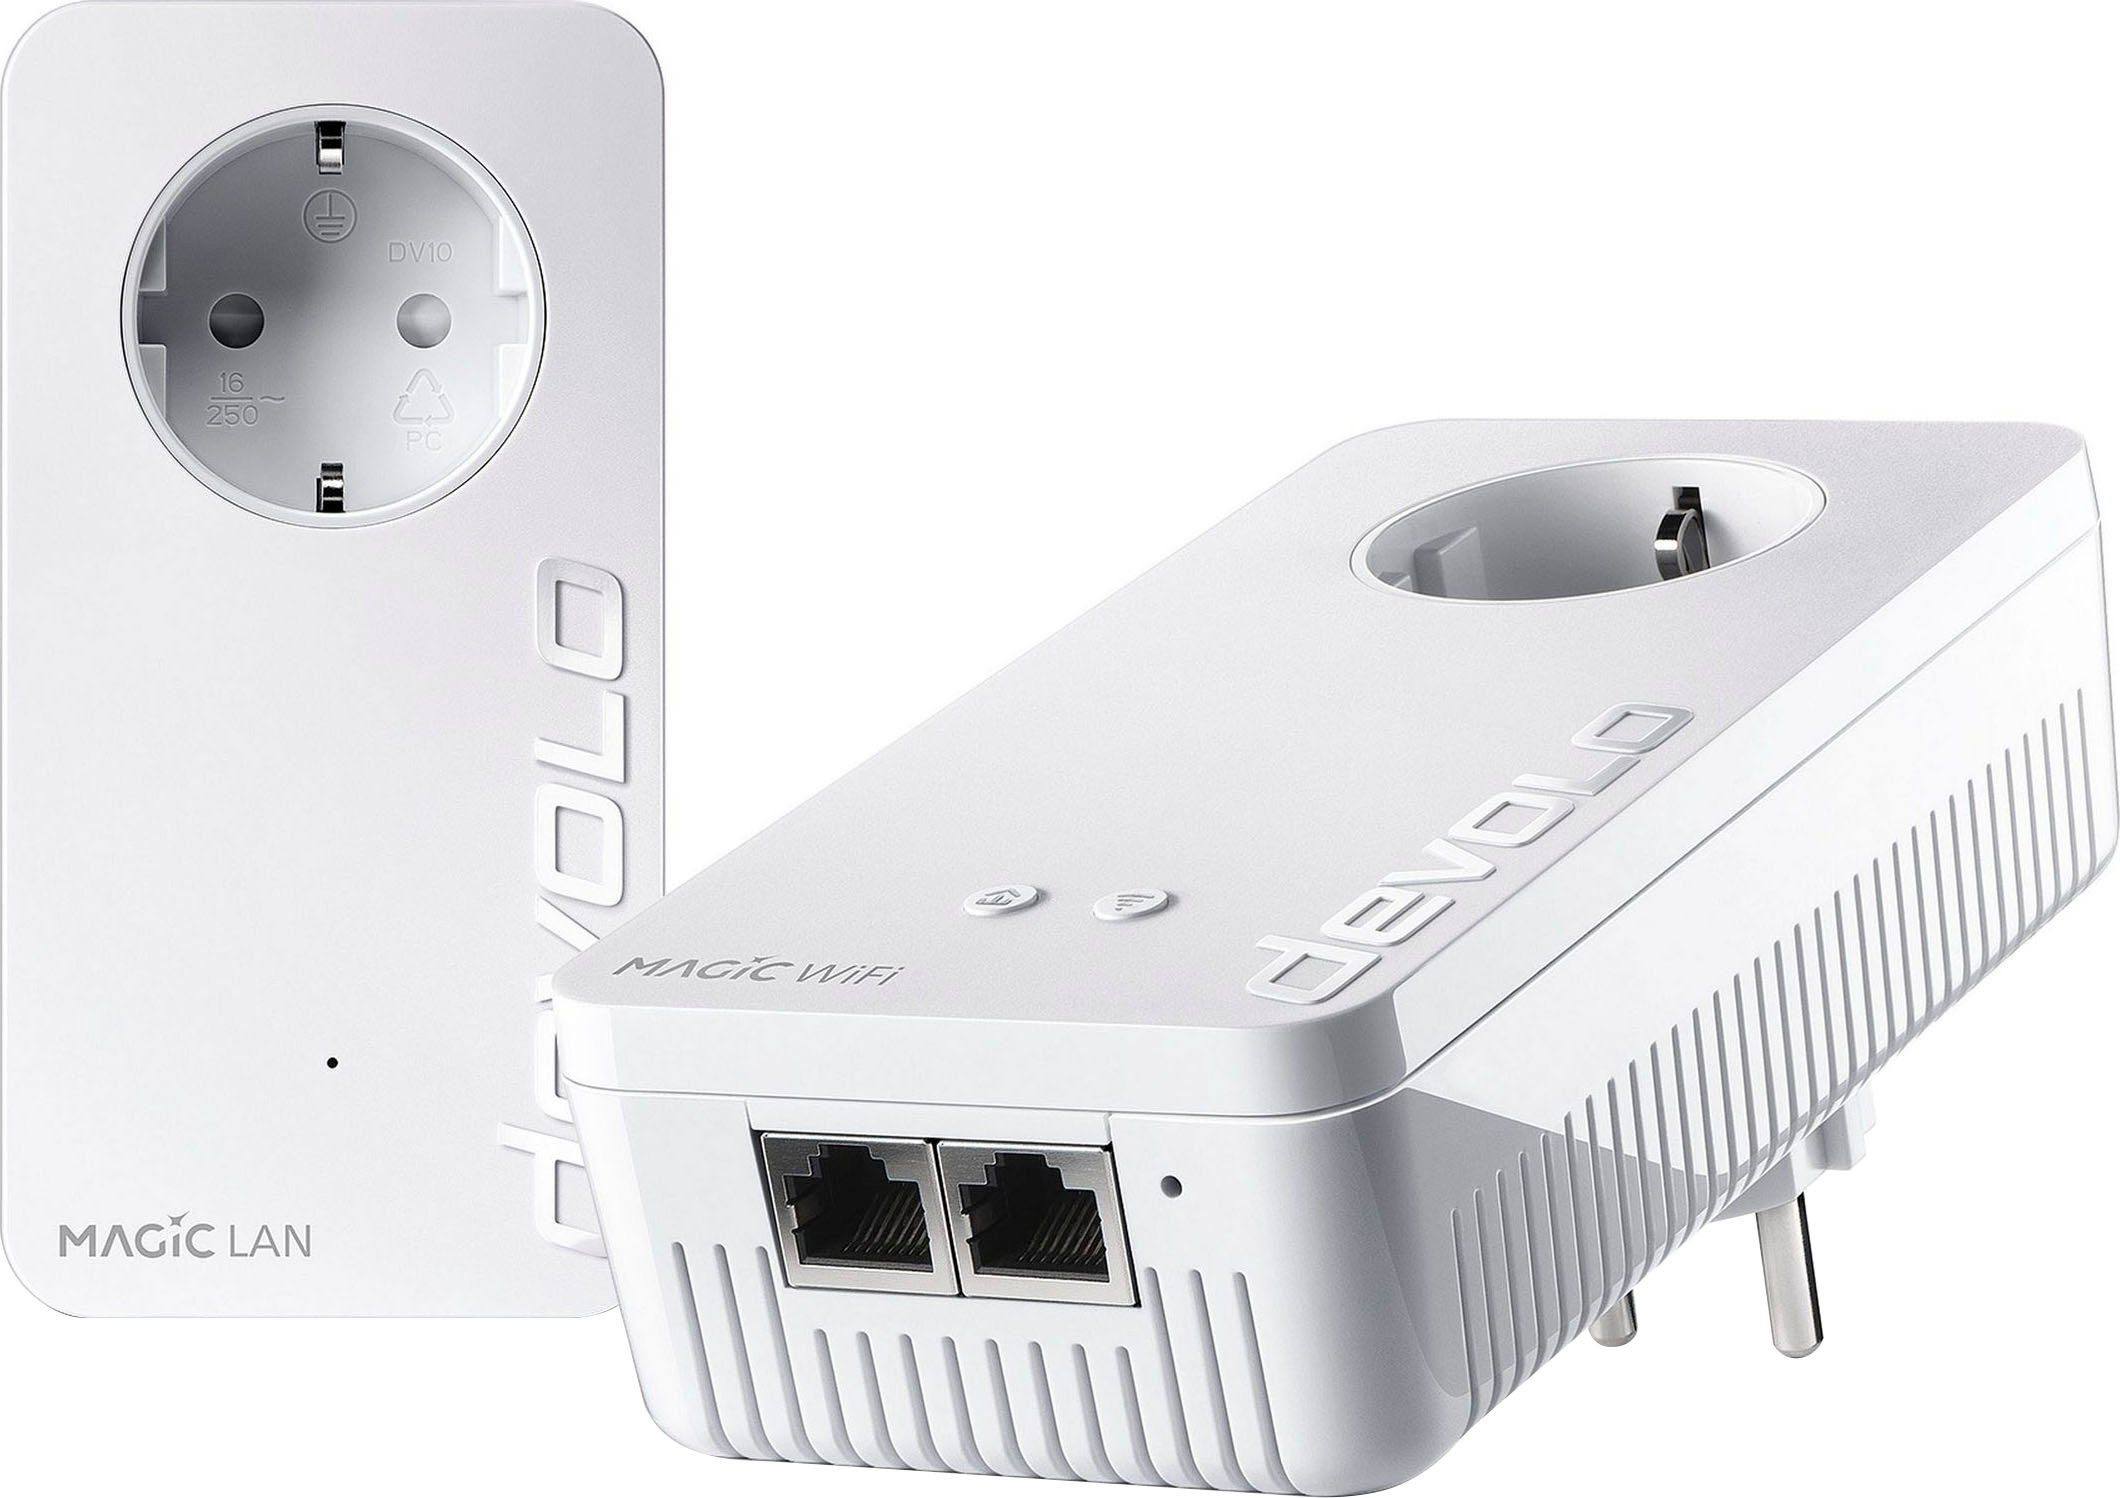 DEVOLO Magic Kit Starter (1200Mbit, ac WLAN, + LAN, Powerline Mesh) WLAN-Router 3x WiFi 1